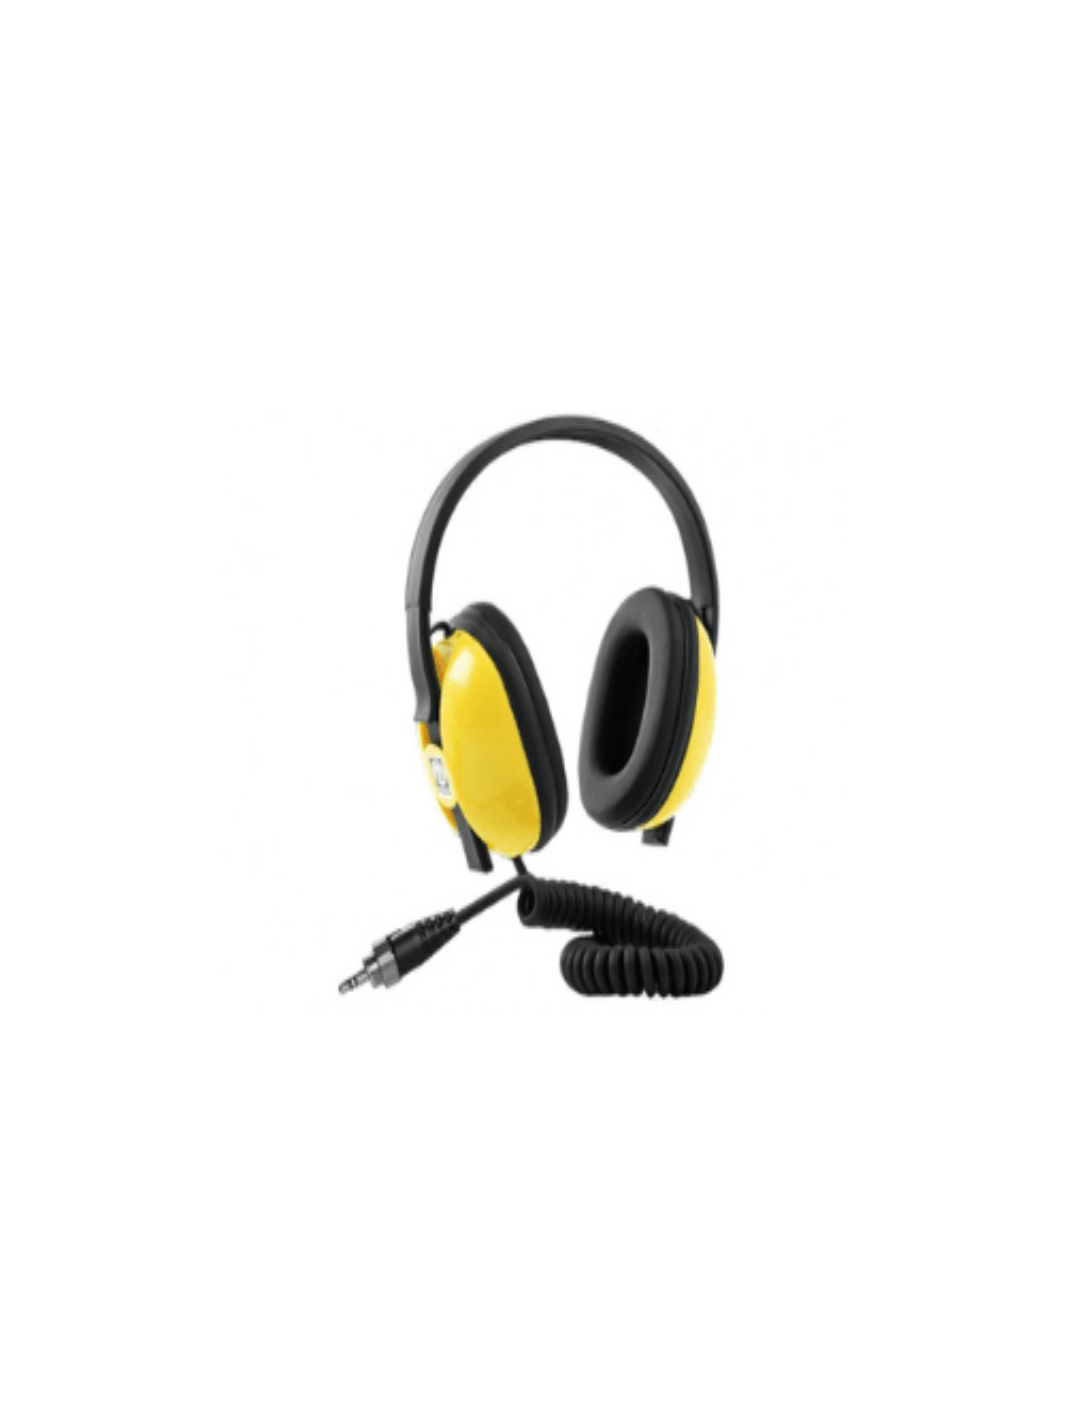 Minelab Equinox Water Proof Headphones - Treasure Coast Metal Detectors